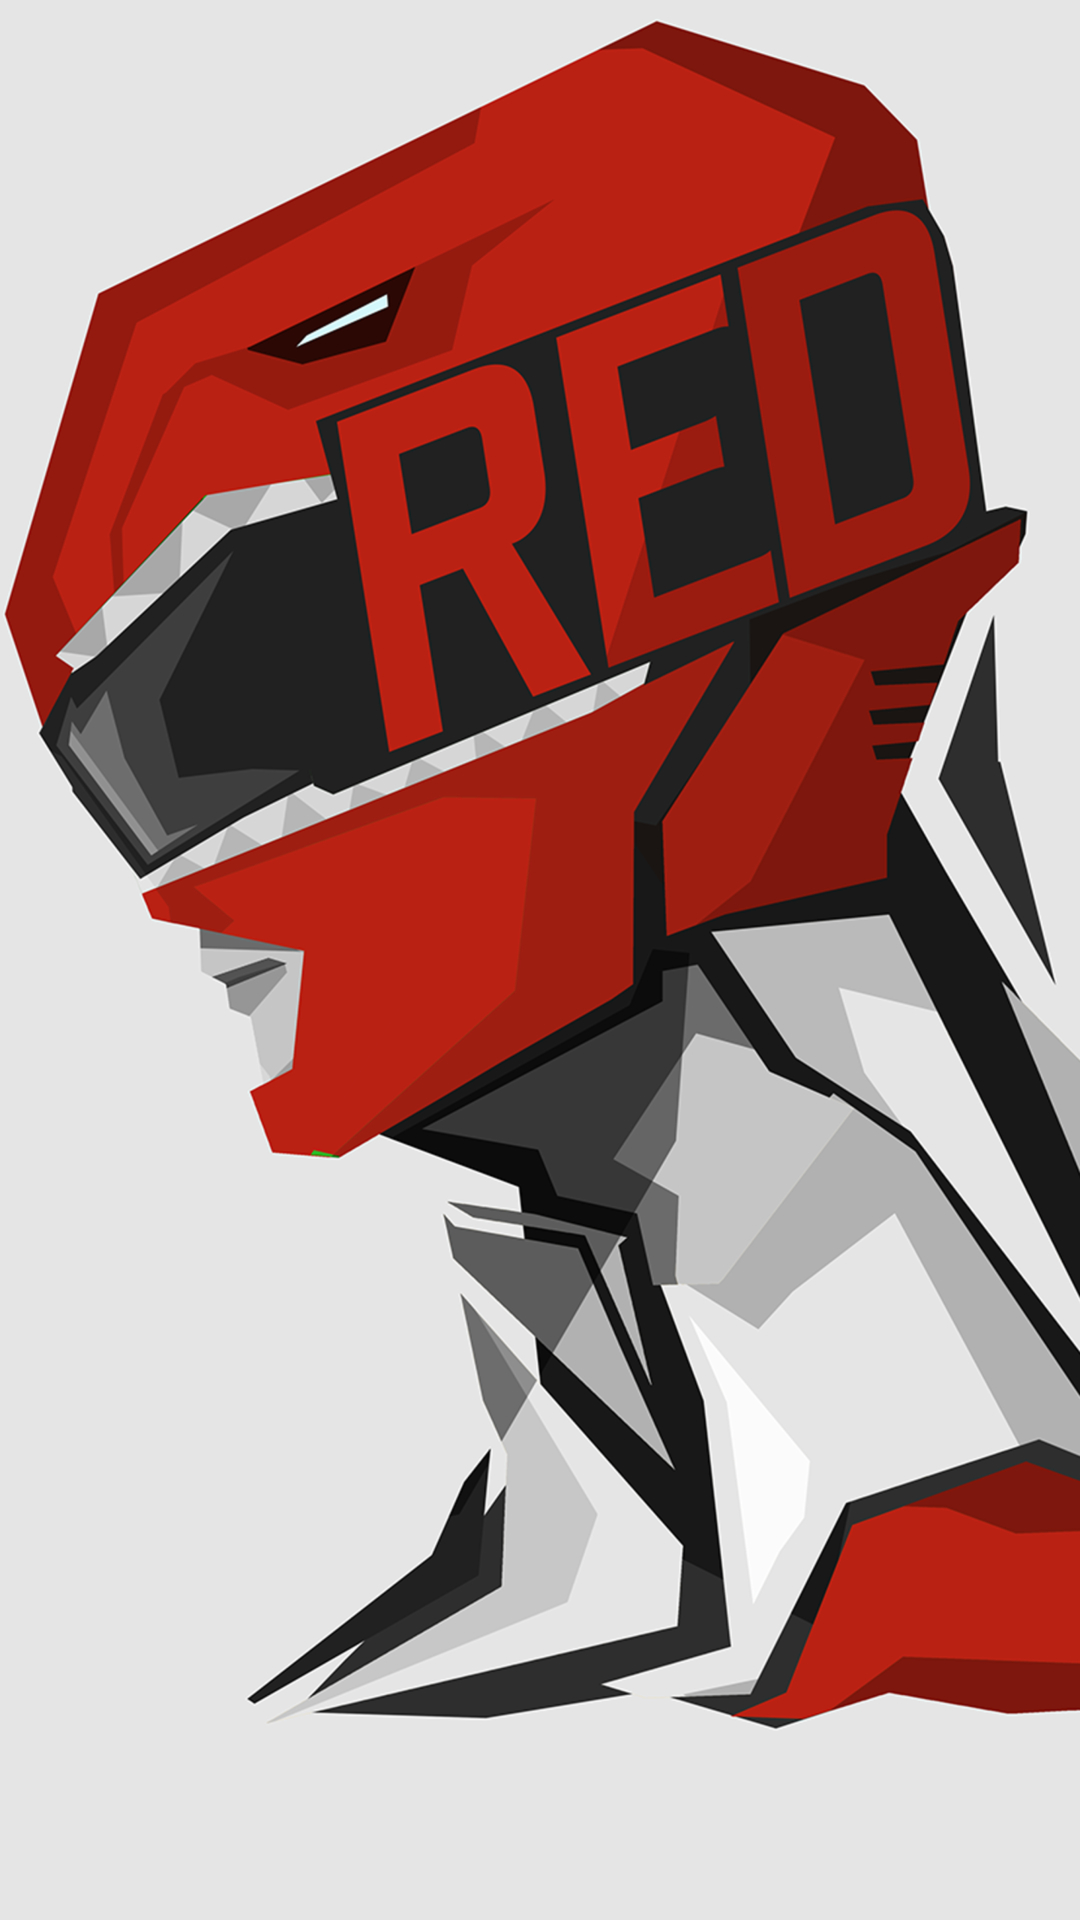 彩色菱形拼贴的戴<span style='color:red;'>头盔</span>的人像手机壁纸